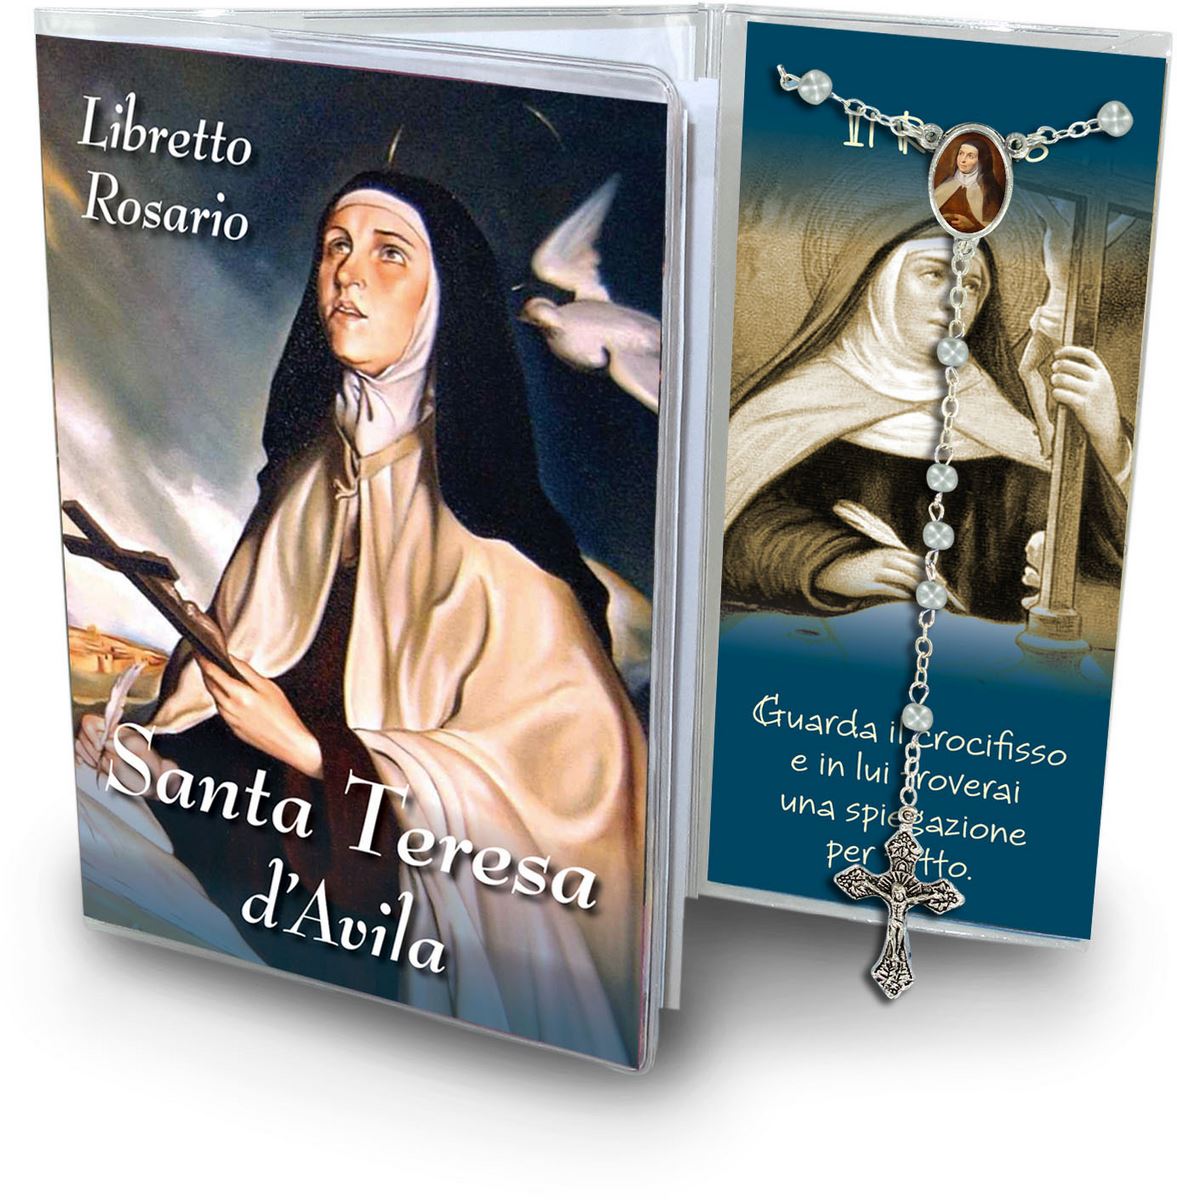 libretto con rosario santa teresa d avila - italiano